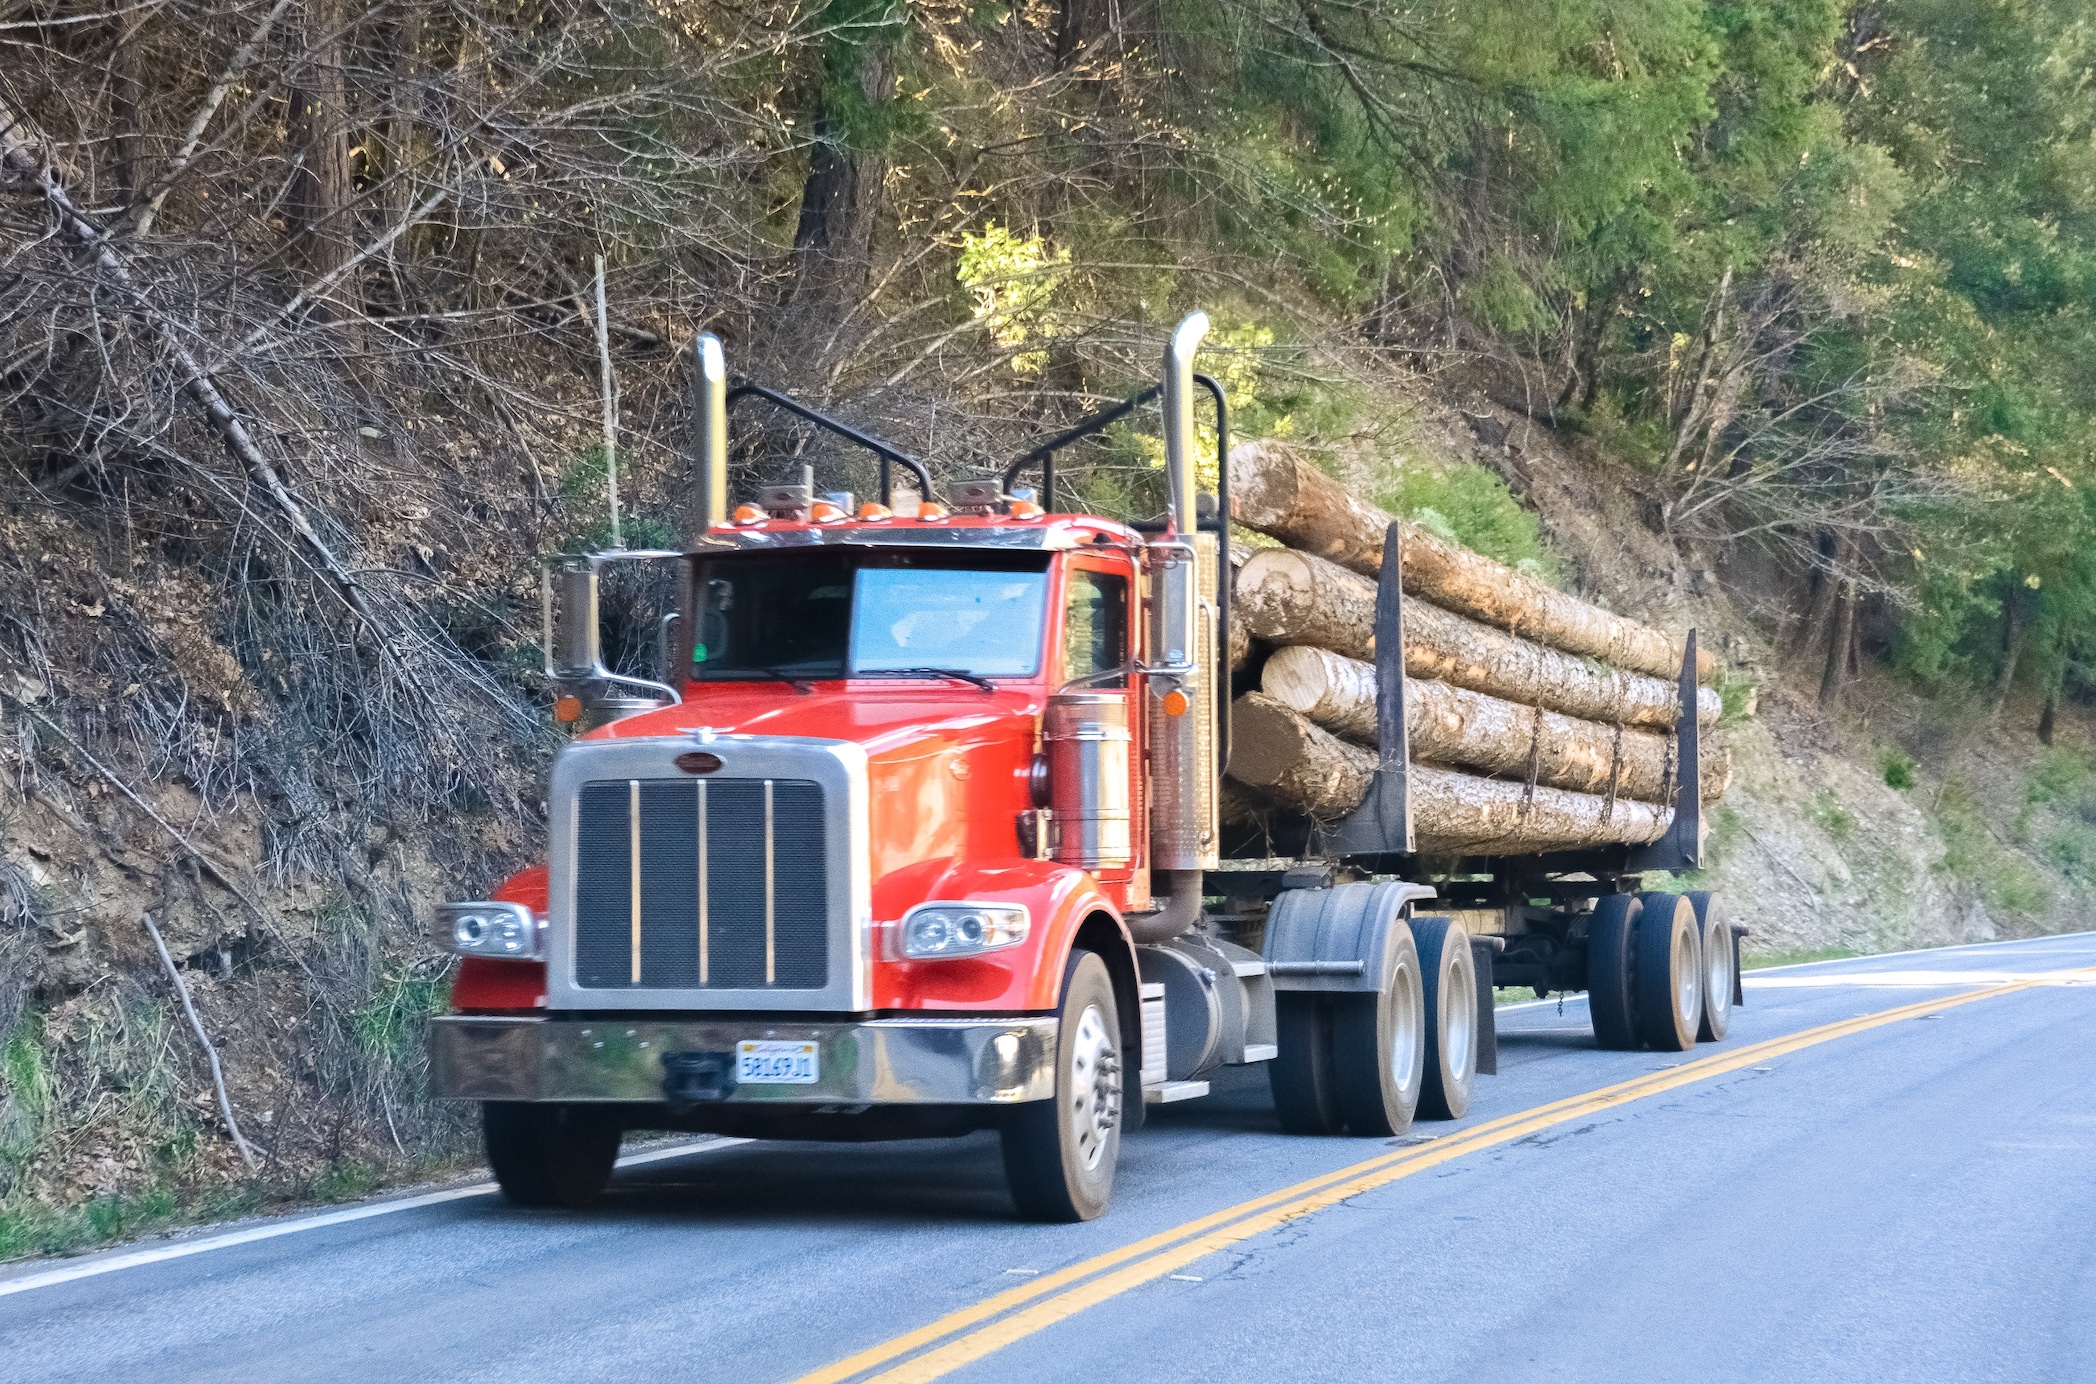 Log truck on the road; image by Jeremy Bezanger, via Unsplash.com.